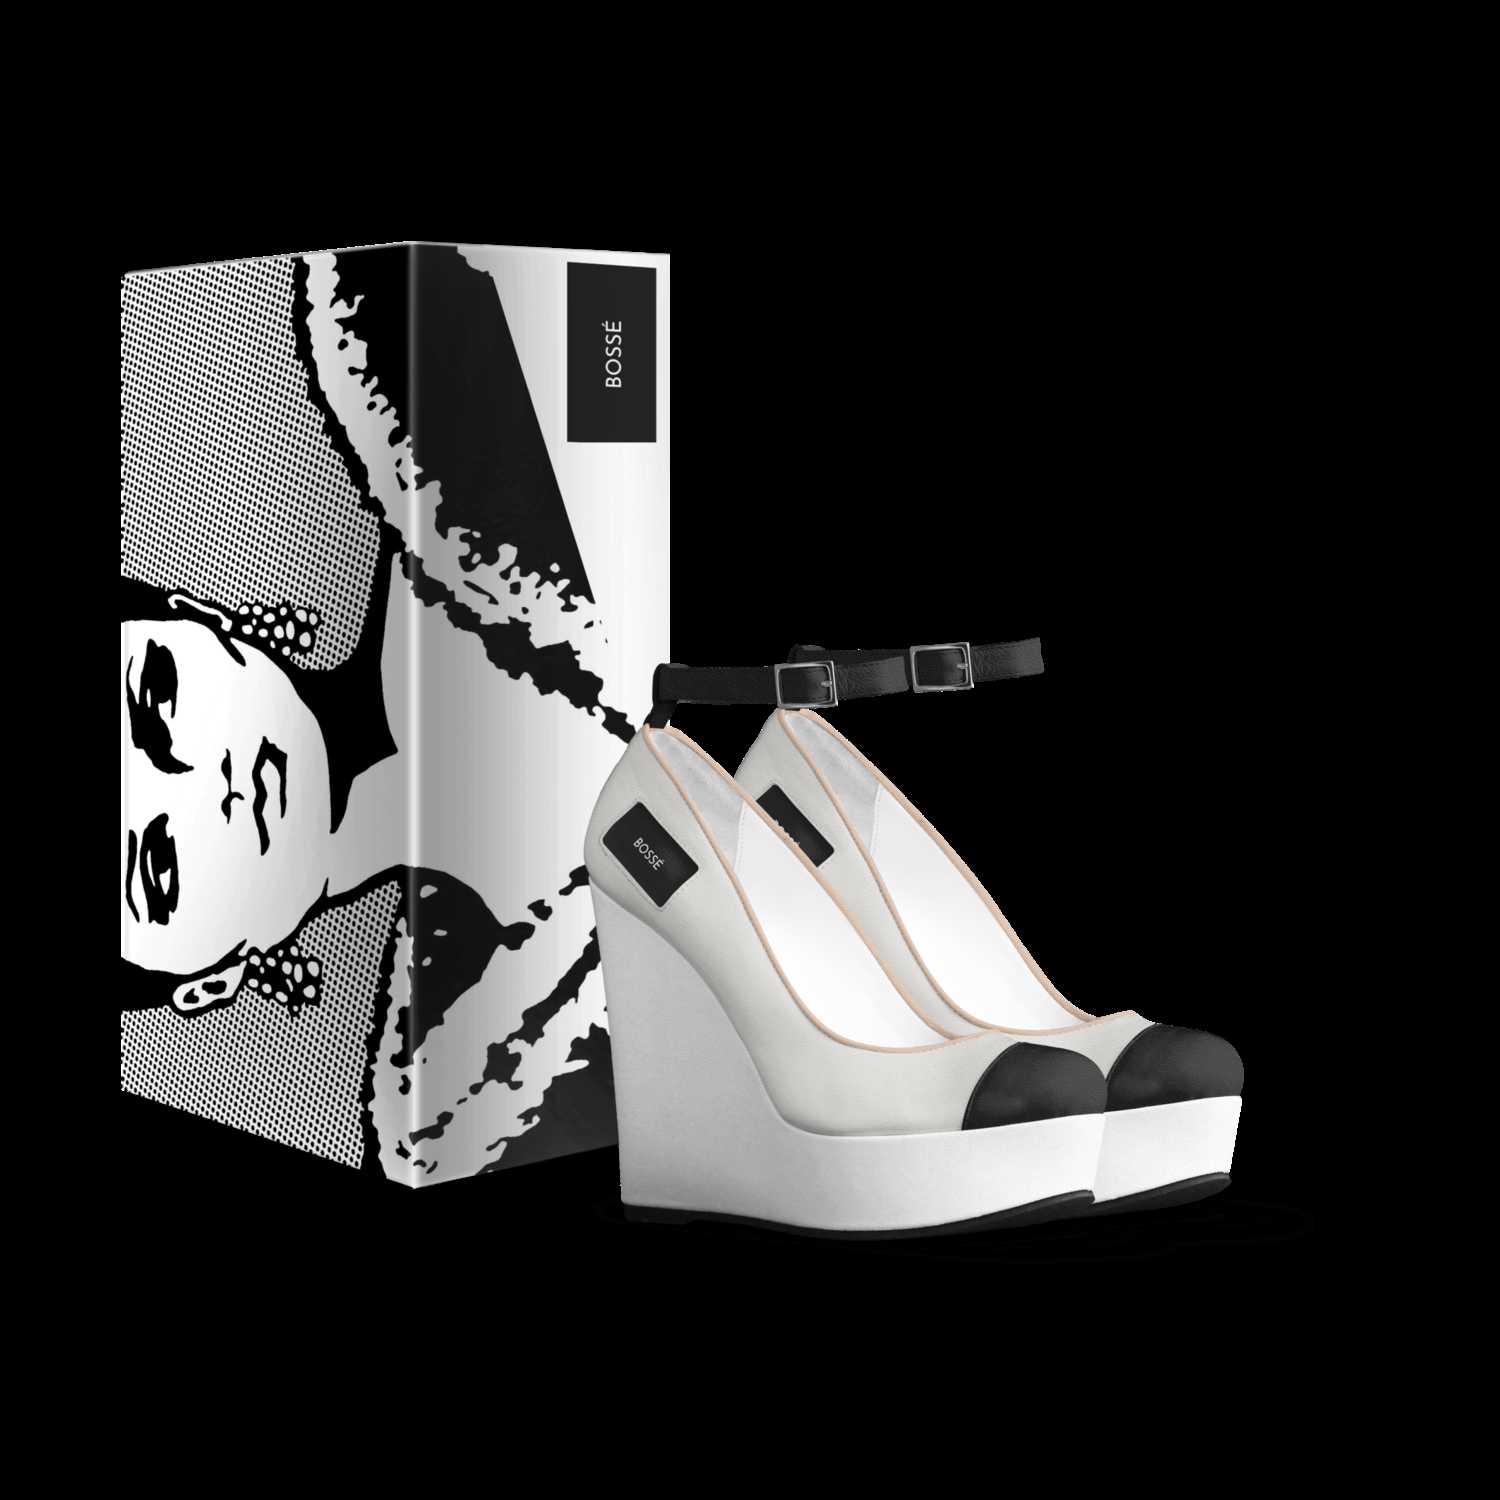 A Custom Shoe concept by Michelle Daniels